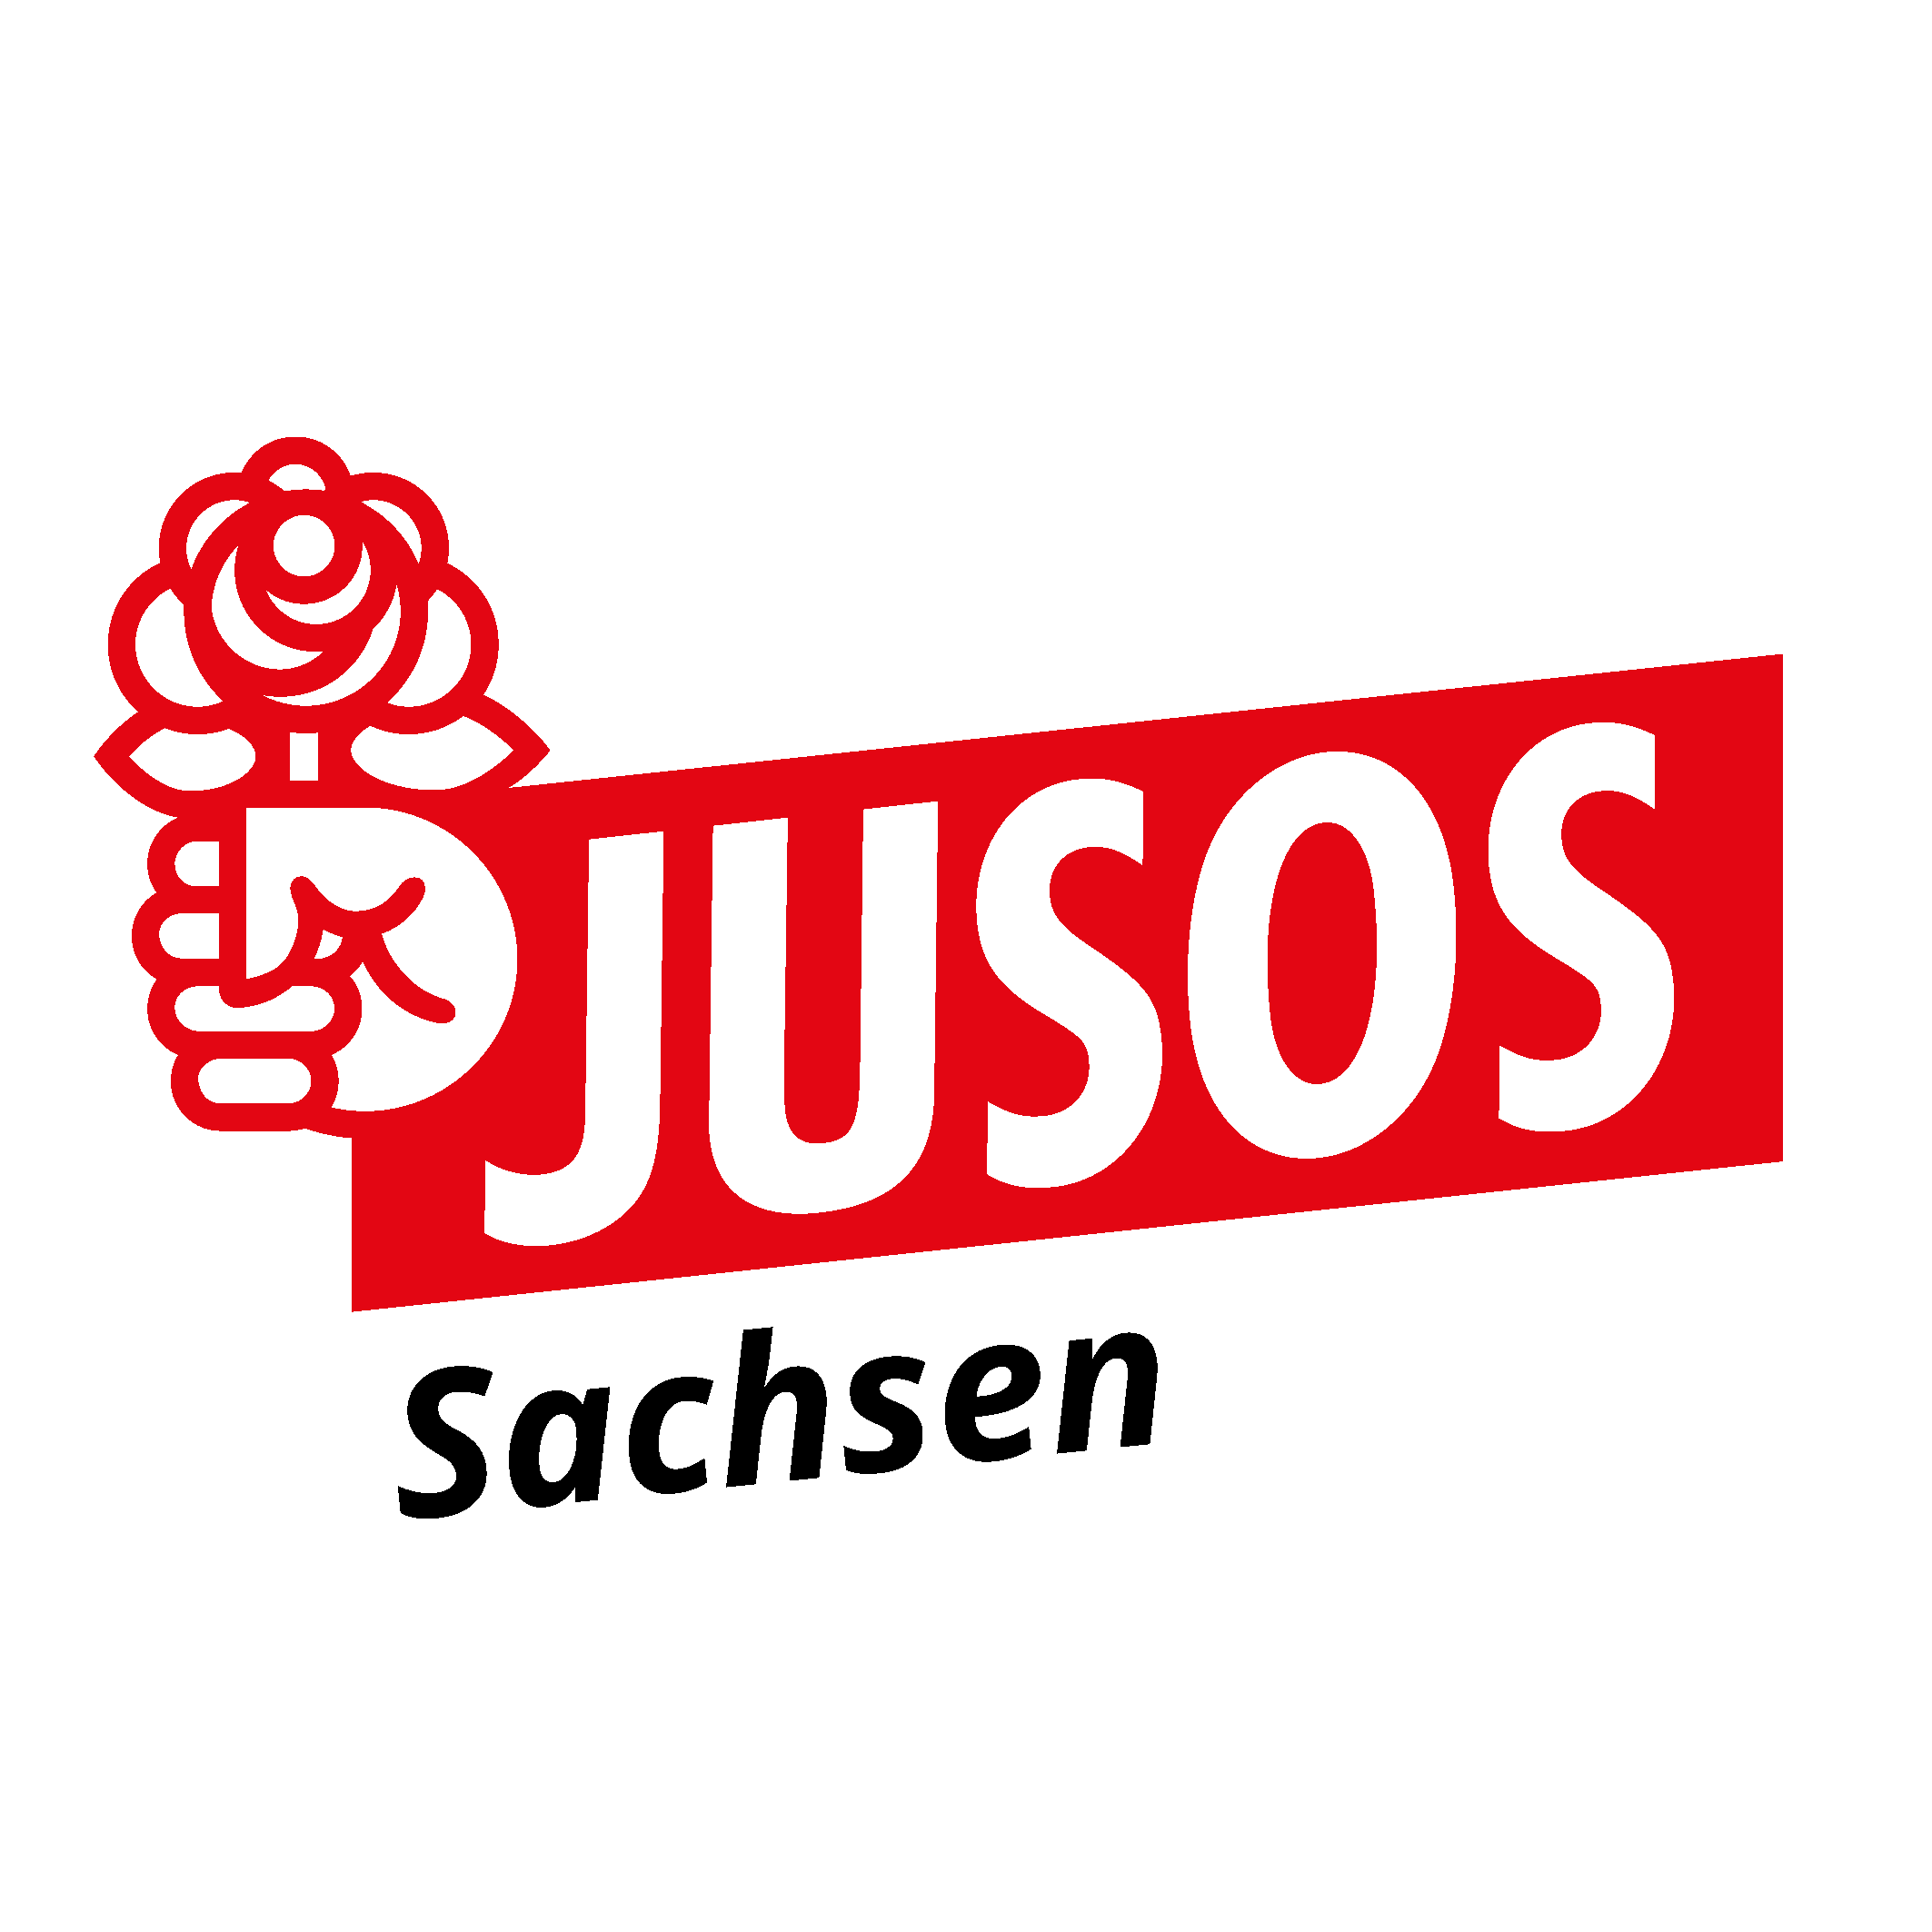 Jusos Sachsen Logo transparent